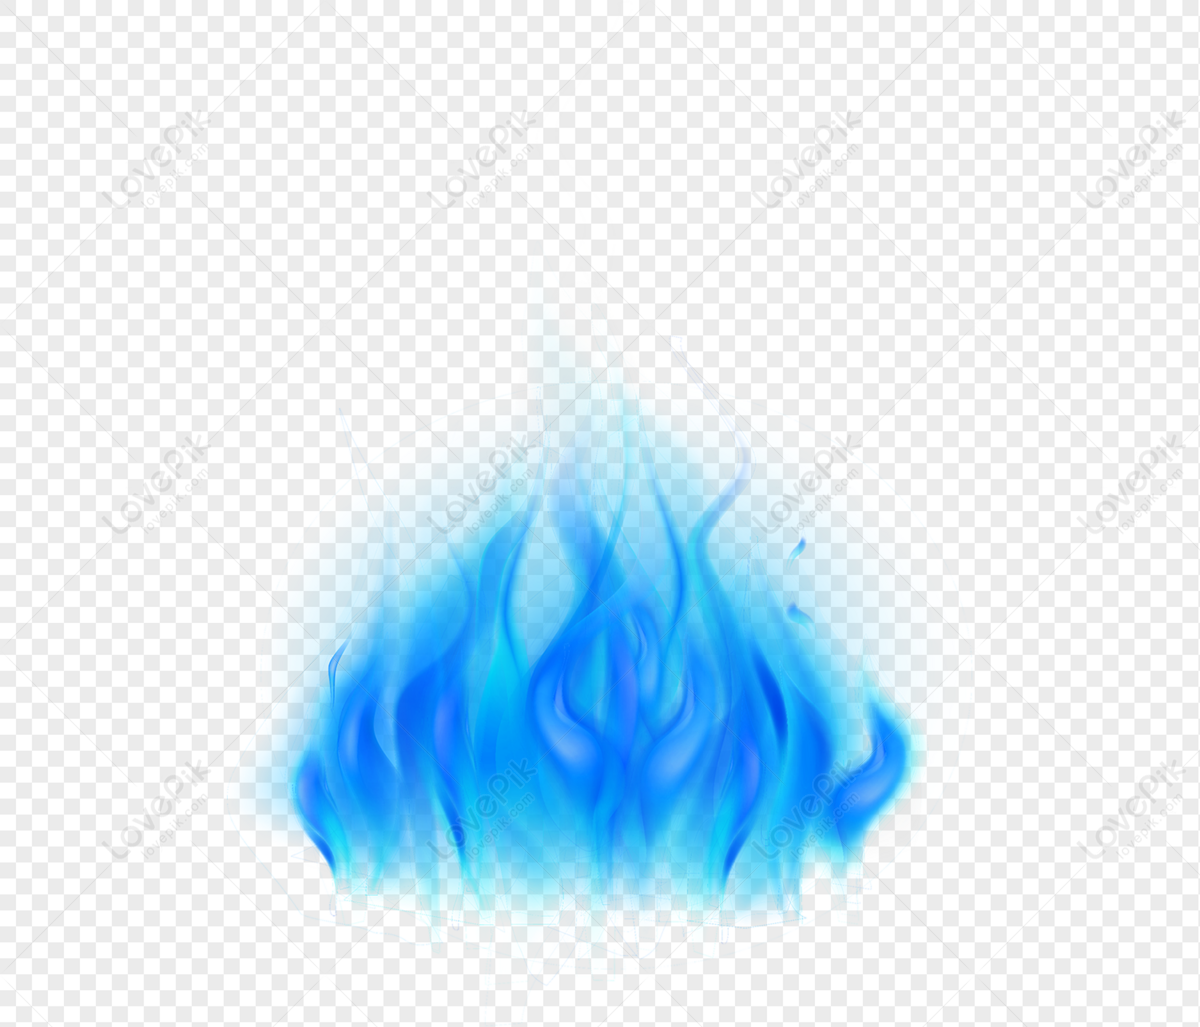 blue fire images hd